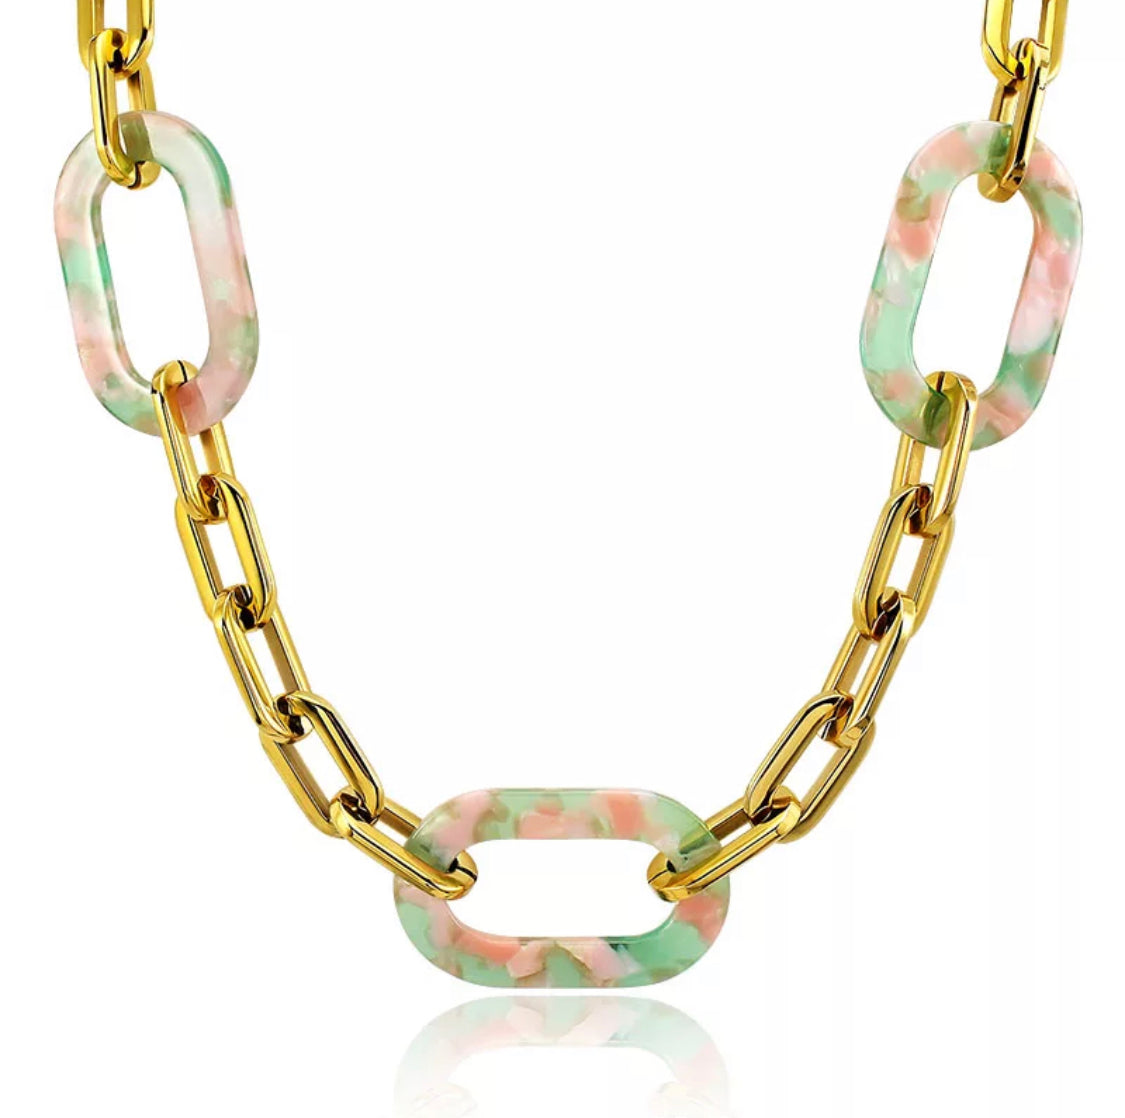 Gianna Flor gold necklace